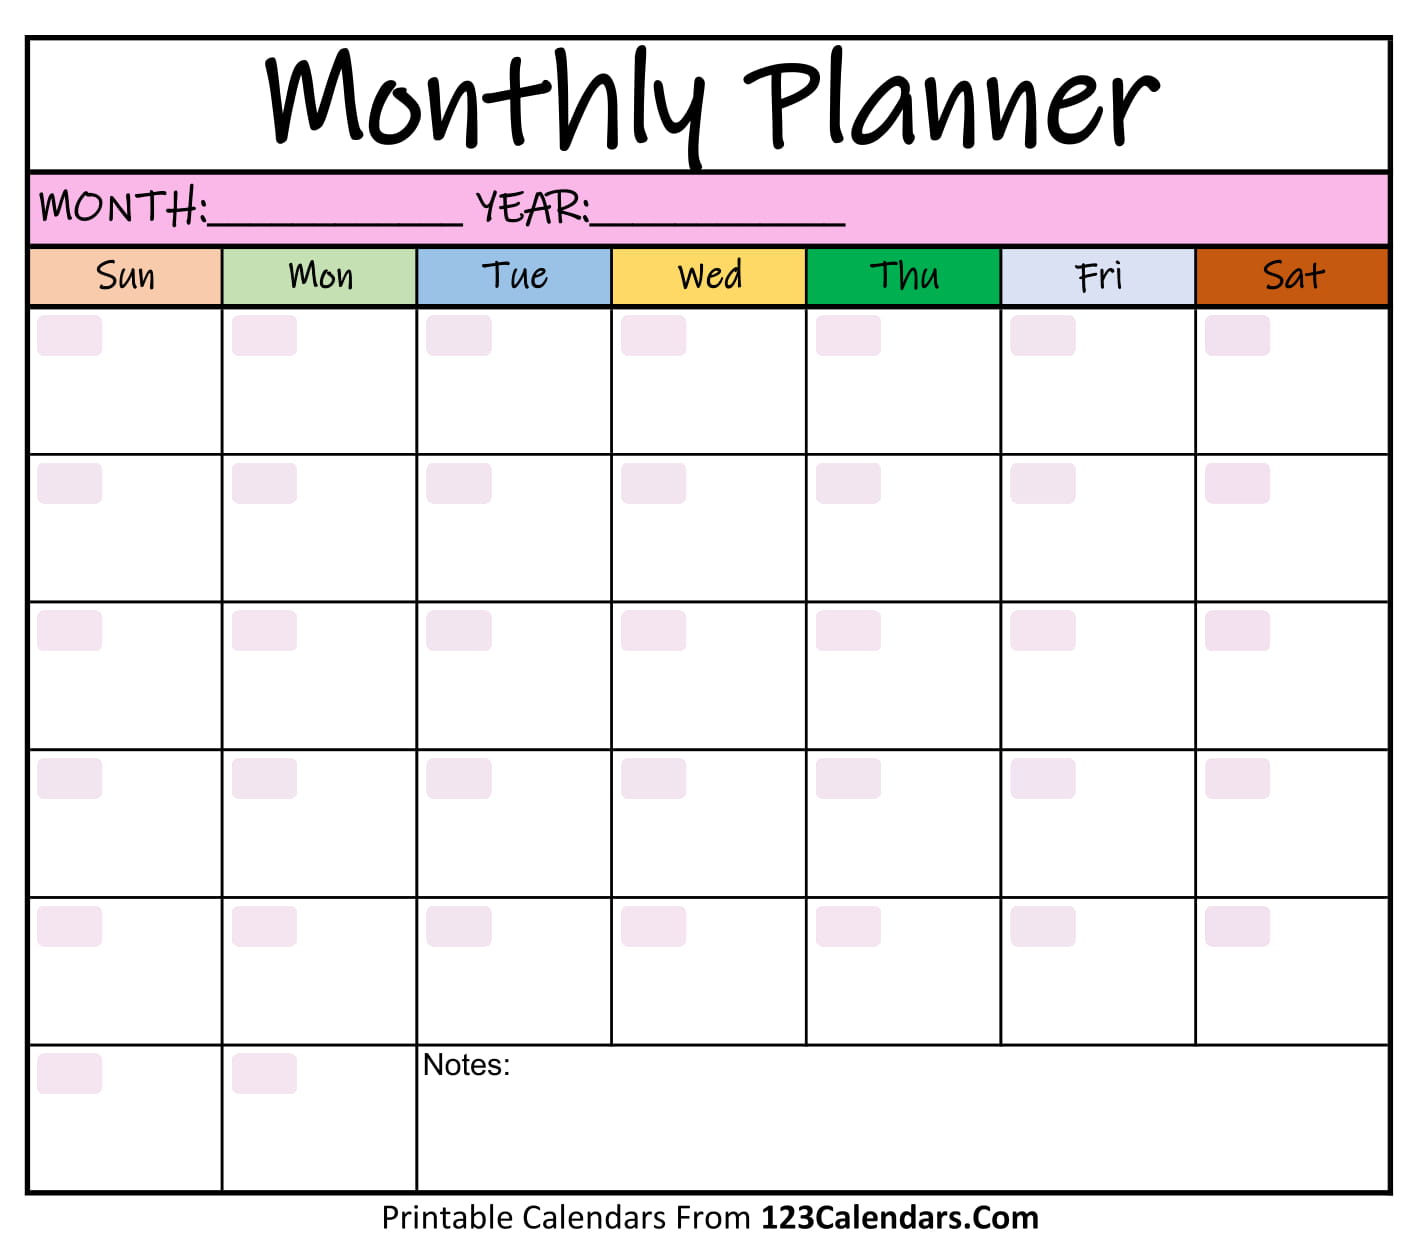 Monthly Calendar Template Printable Free - Printable Templates